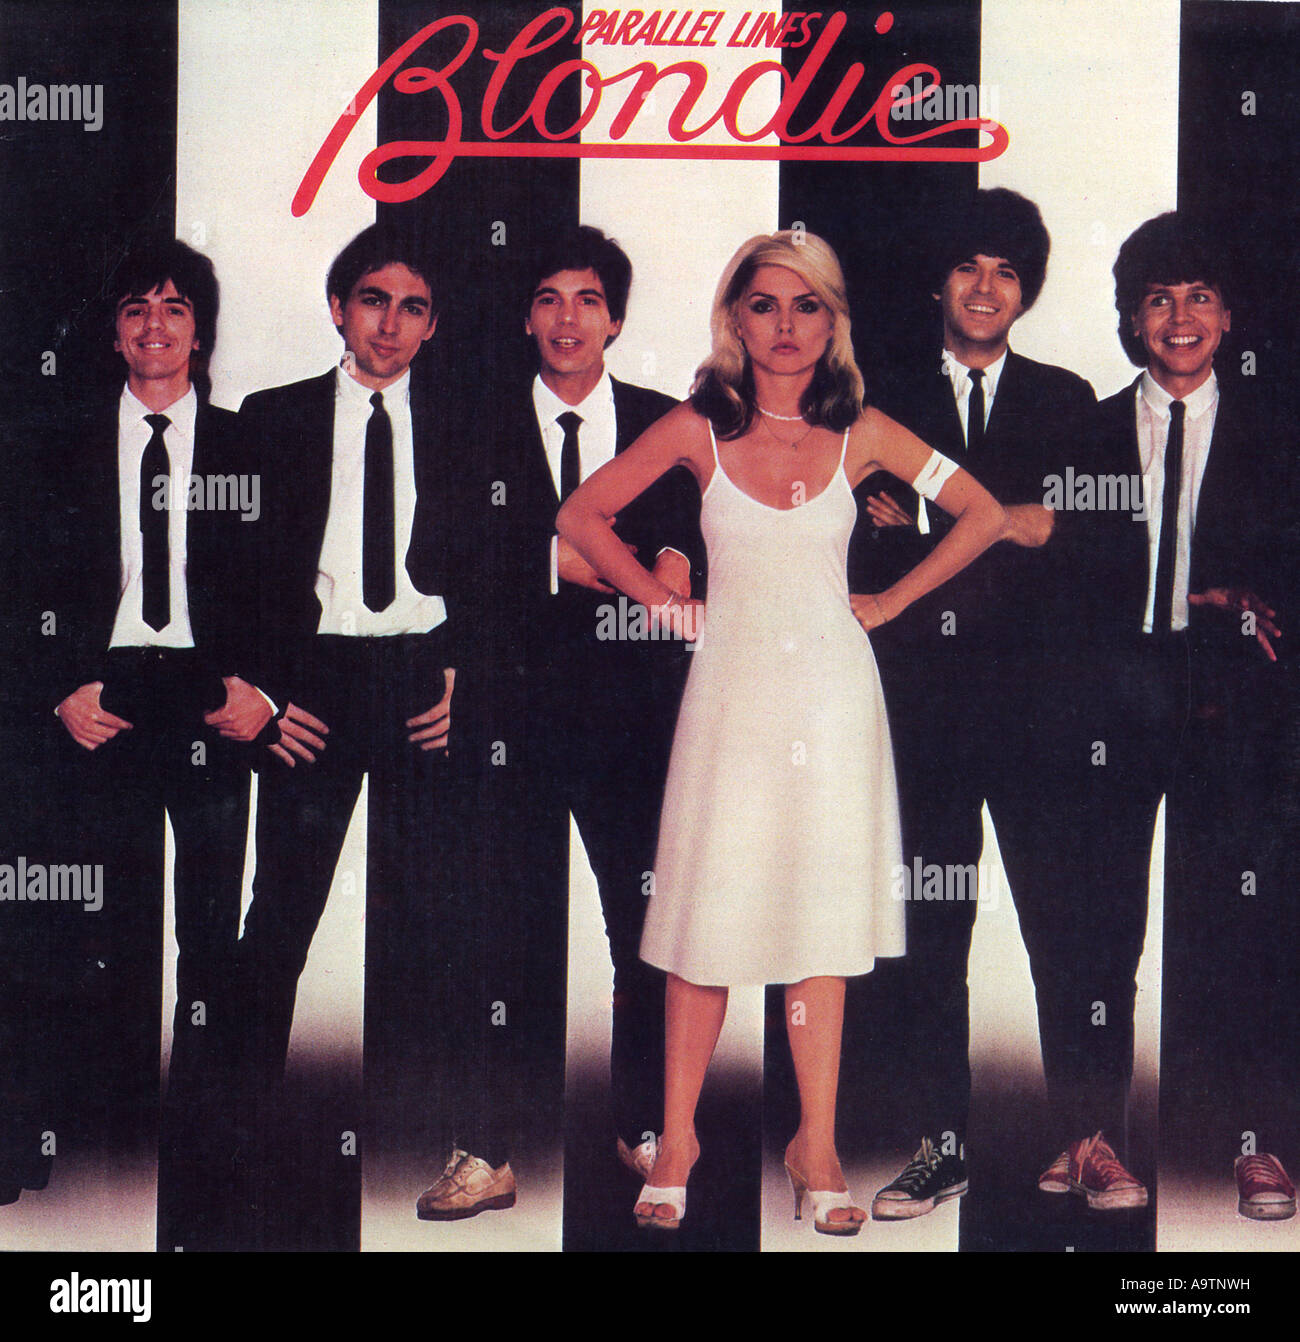 BLONDIE - cover of 1978 Parallel Lines album Stock Photo